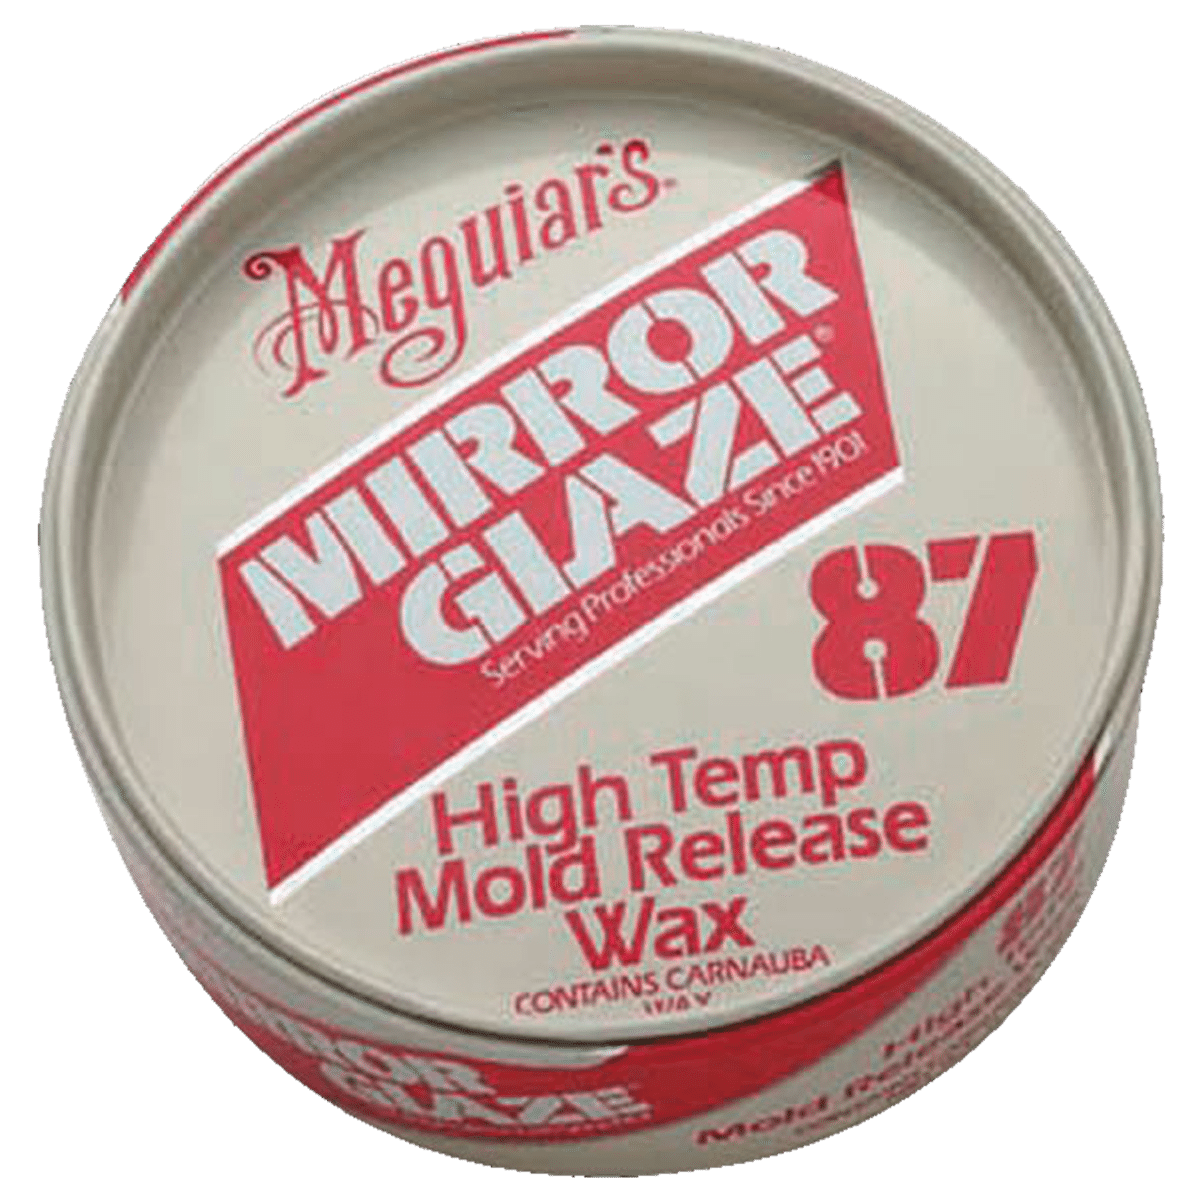 Meguiars 87 High Temp Mold Release Wax 311g Wosk Rozdzielający